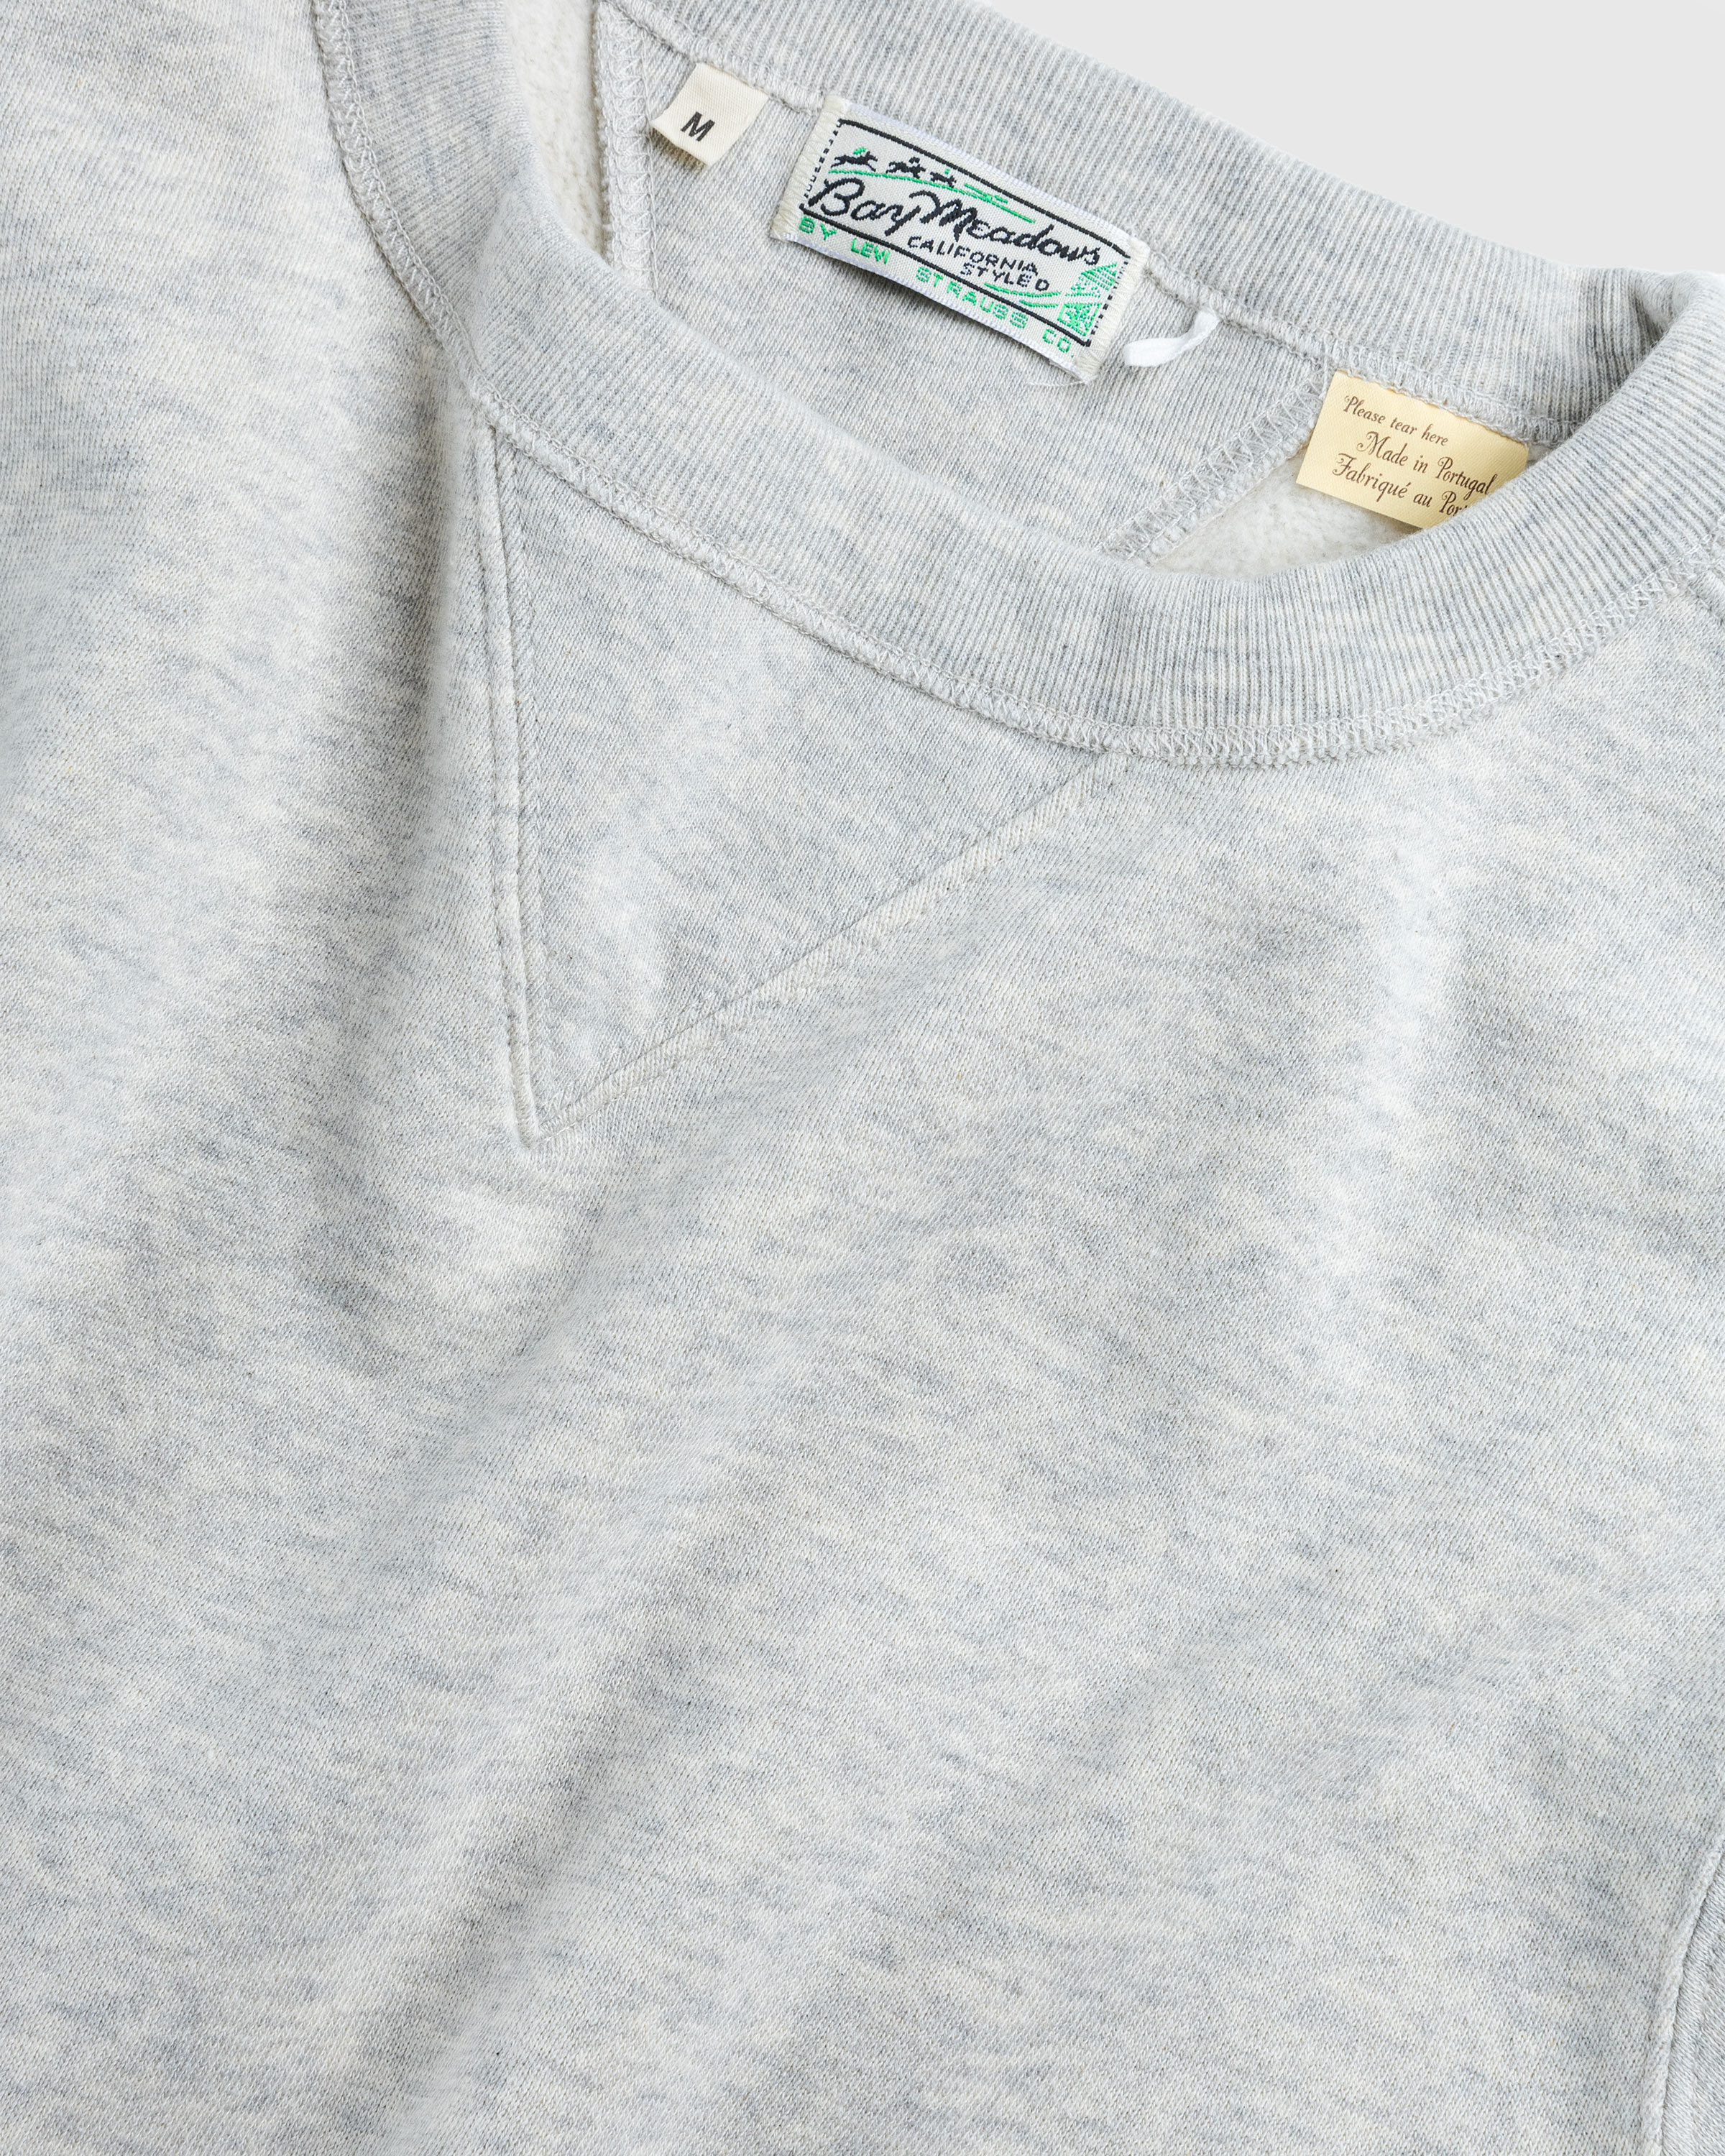 Levi's – Bay Meadows Crewneck Sweatshirt Oatmeal Mele - Longsleeve Shirts - Beige - Image 7